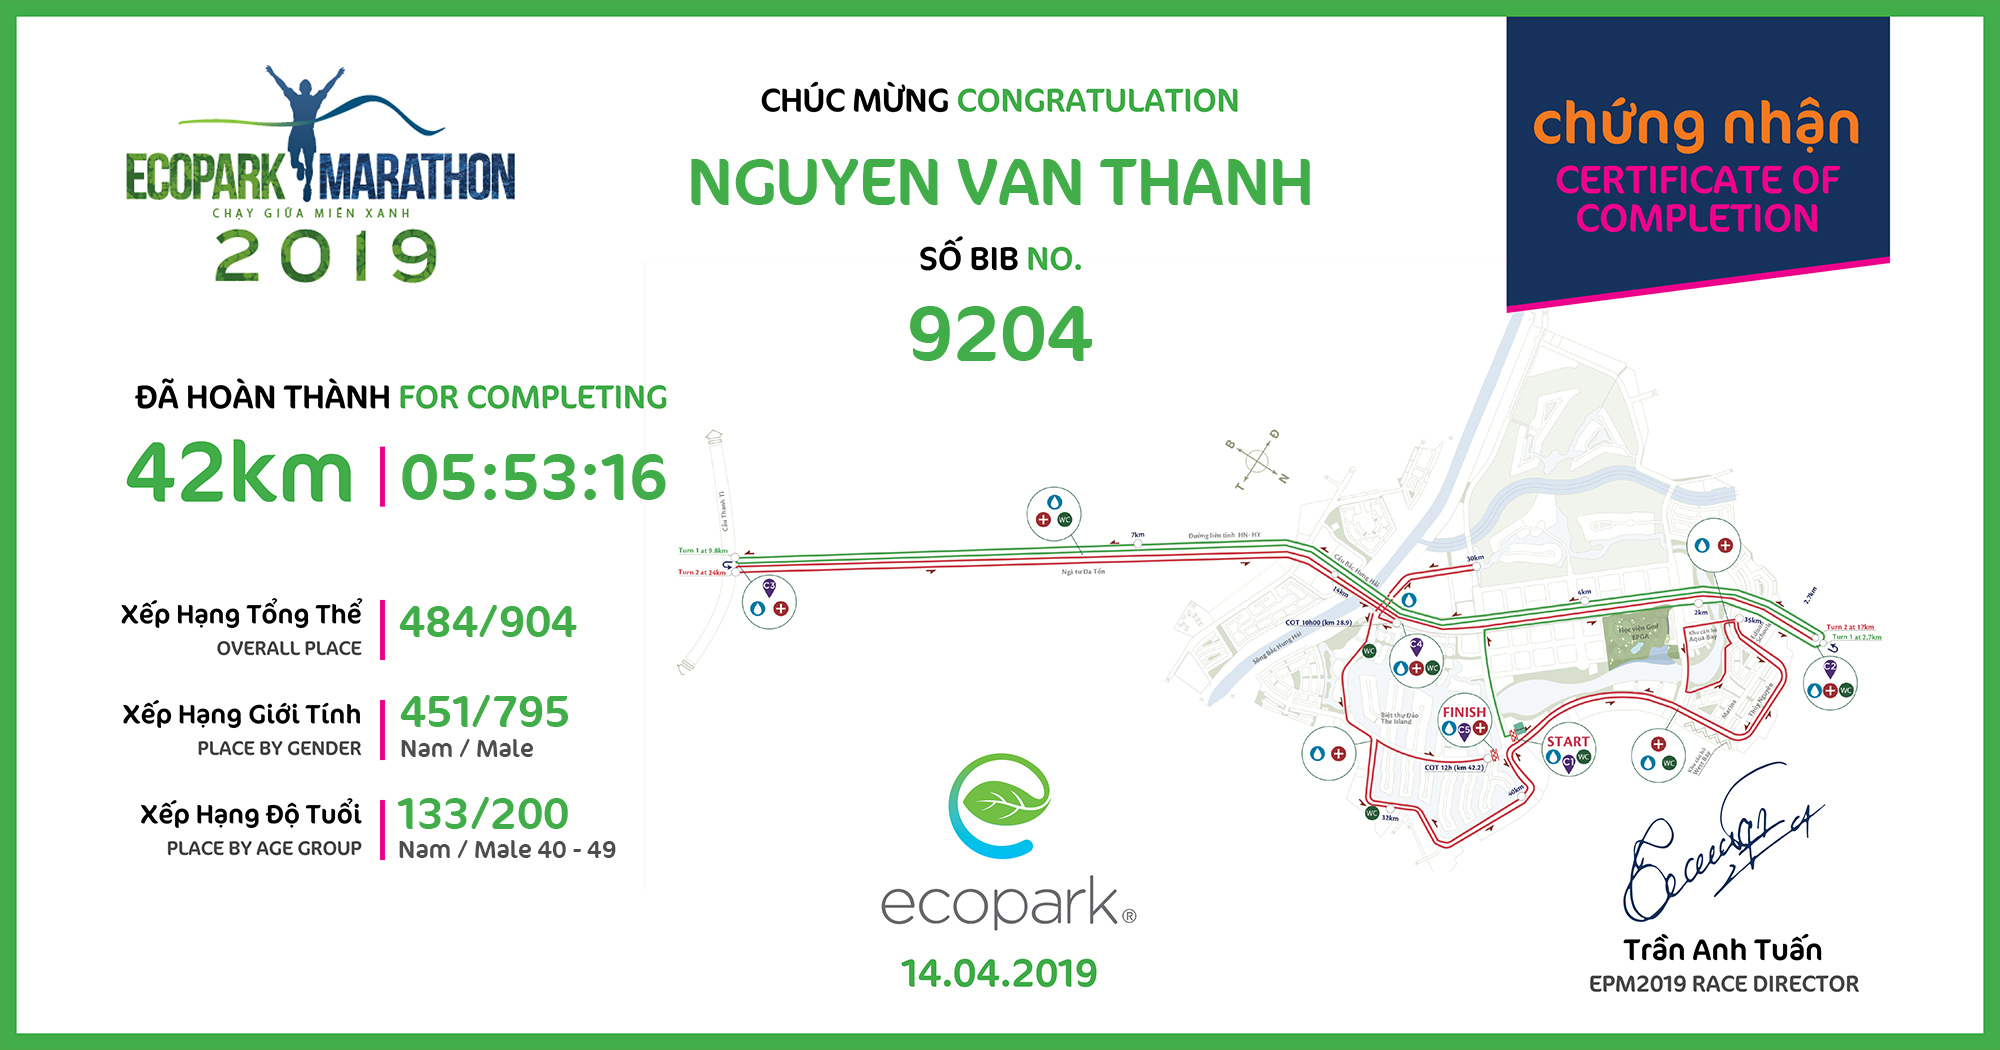 9204 - NGUYEN VAN THANH